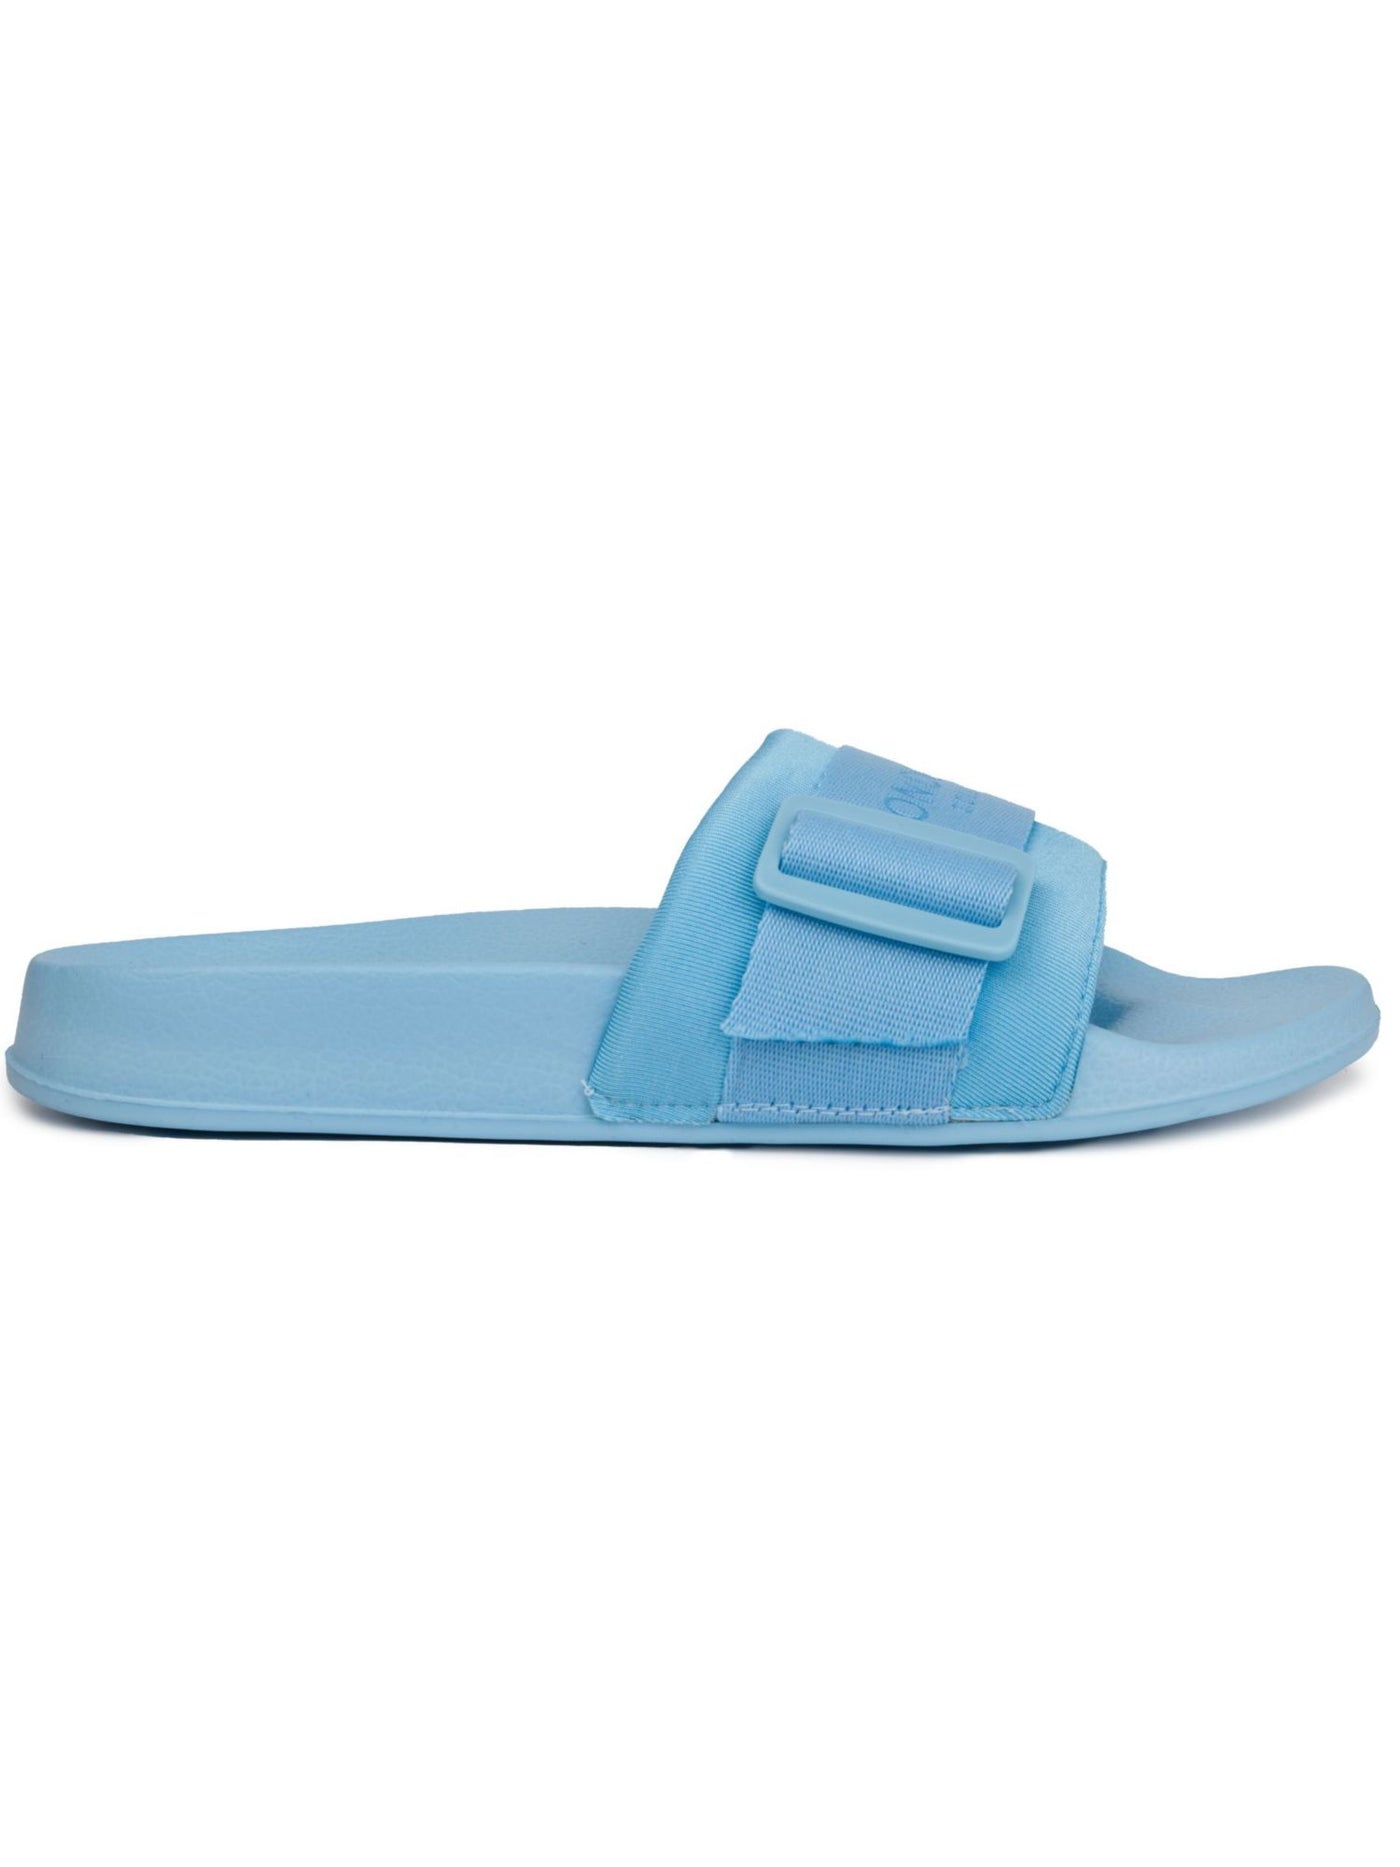 LONDON FOG COLLECTION Womens Blue Buckle Accent Logo Skyden Round Toe Platform Slip On Slide Sandals 10 M